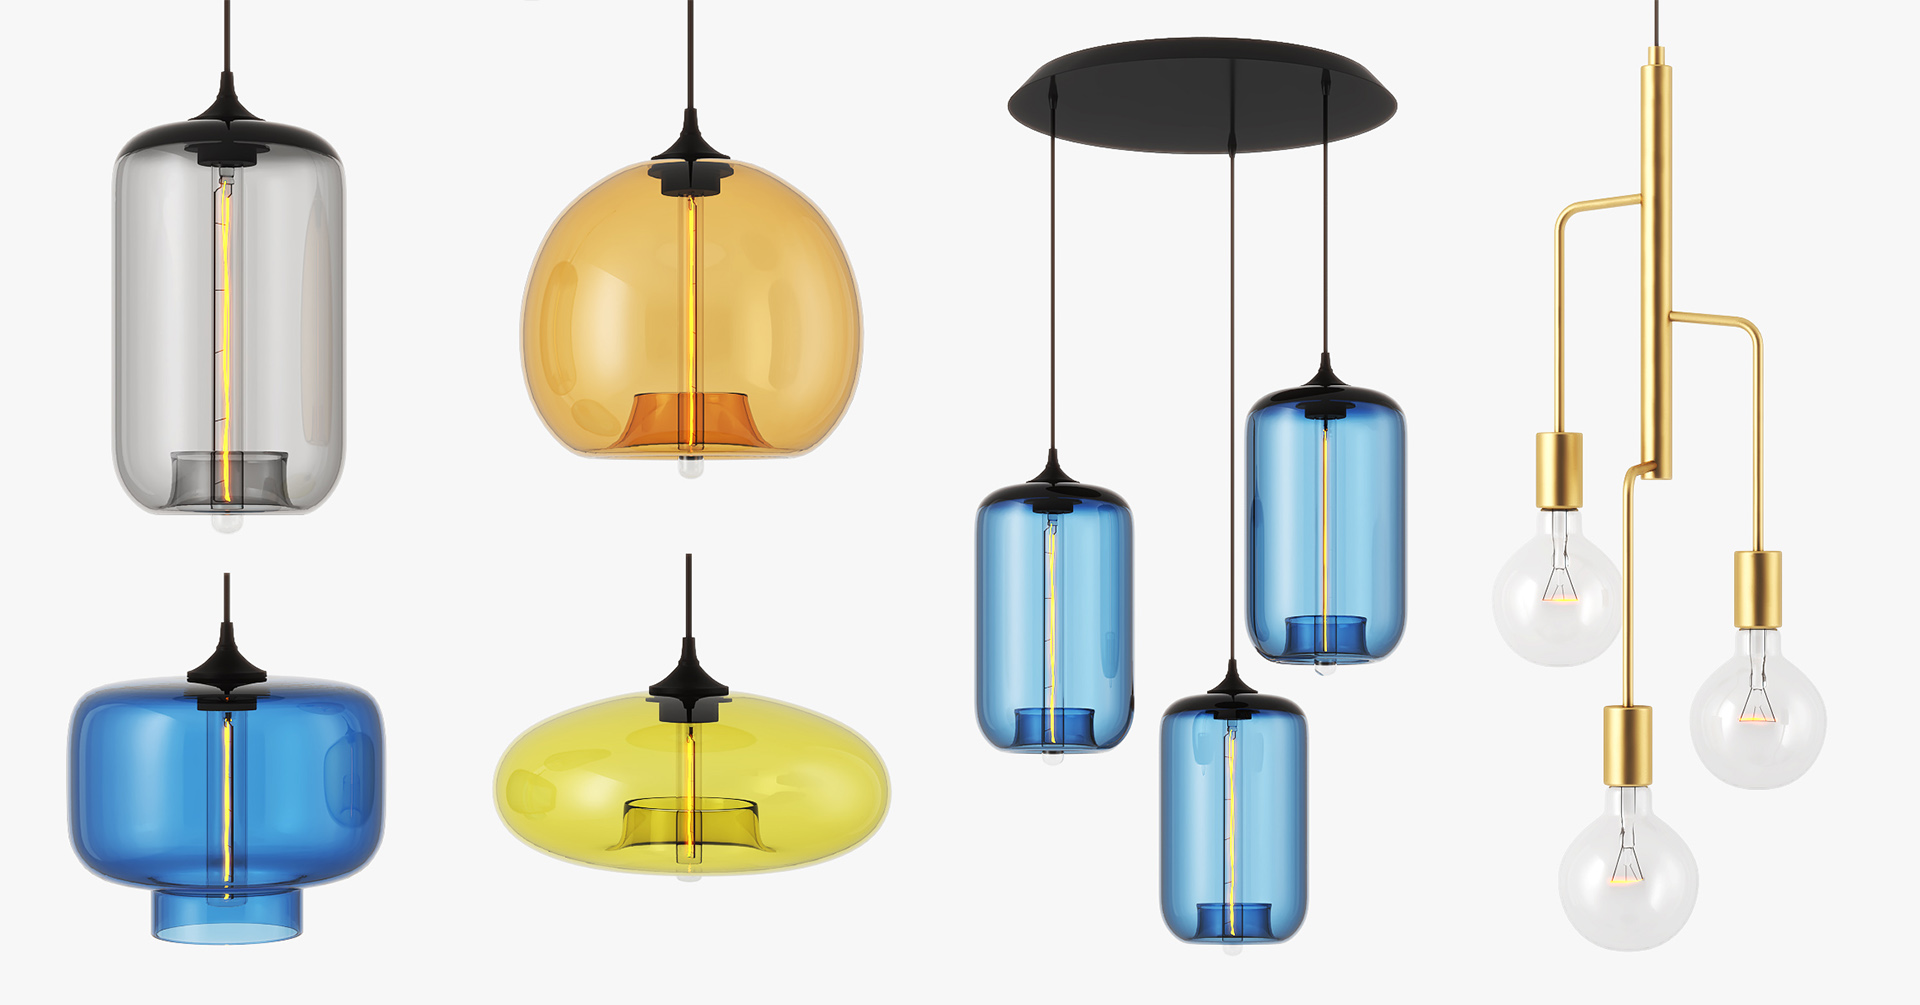 Nowe darmowe modele lamp wiszących! Niche Modern, Kare Design, Frandsen